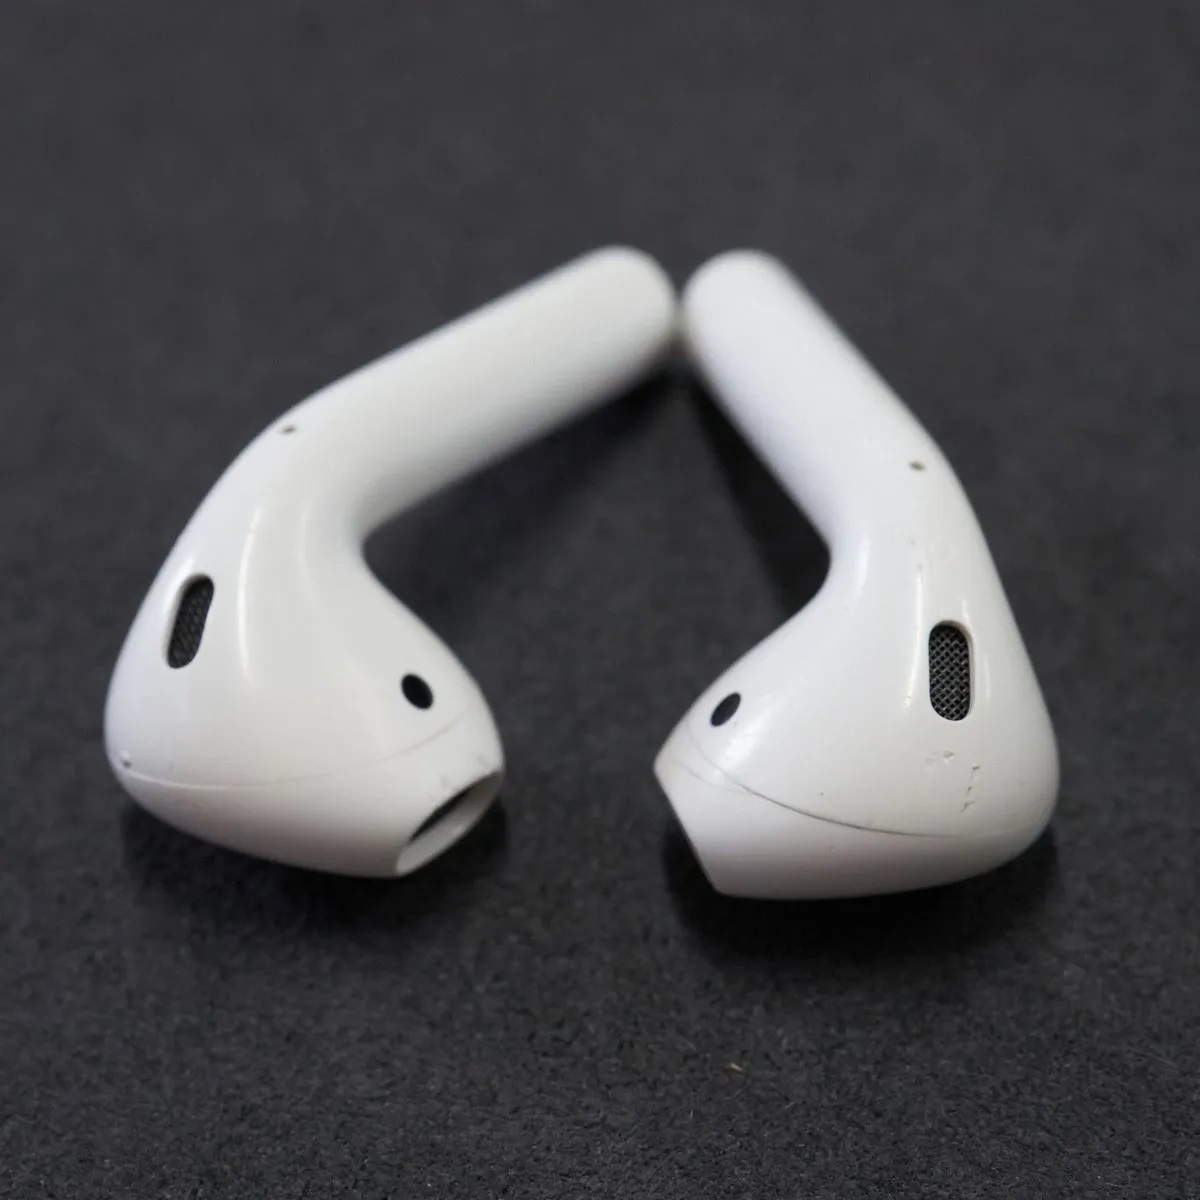 Apple AirPods エアーポッズ イヤホンのみ USED品 LR 両耳 第二世代 A2031 A2032 Bluetooth MV7N2J/A 完動品 即日発送【難有】 V9758_画像3